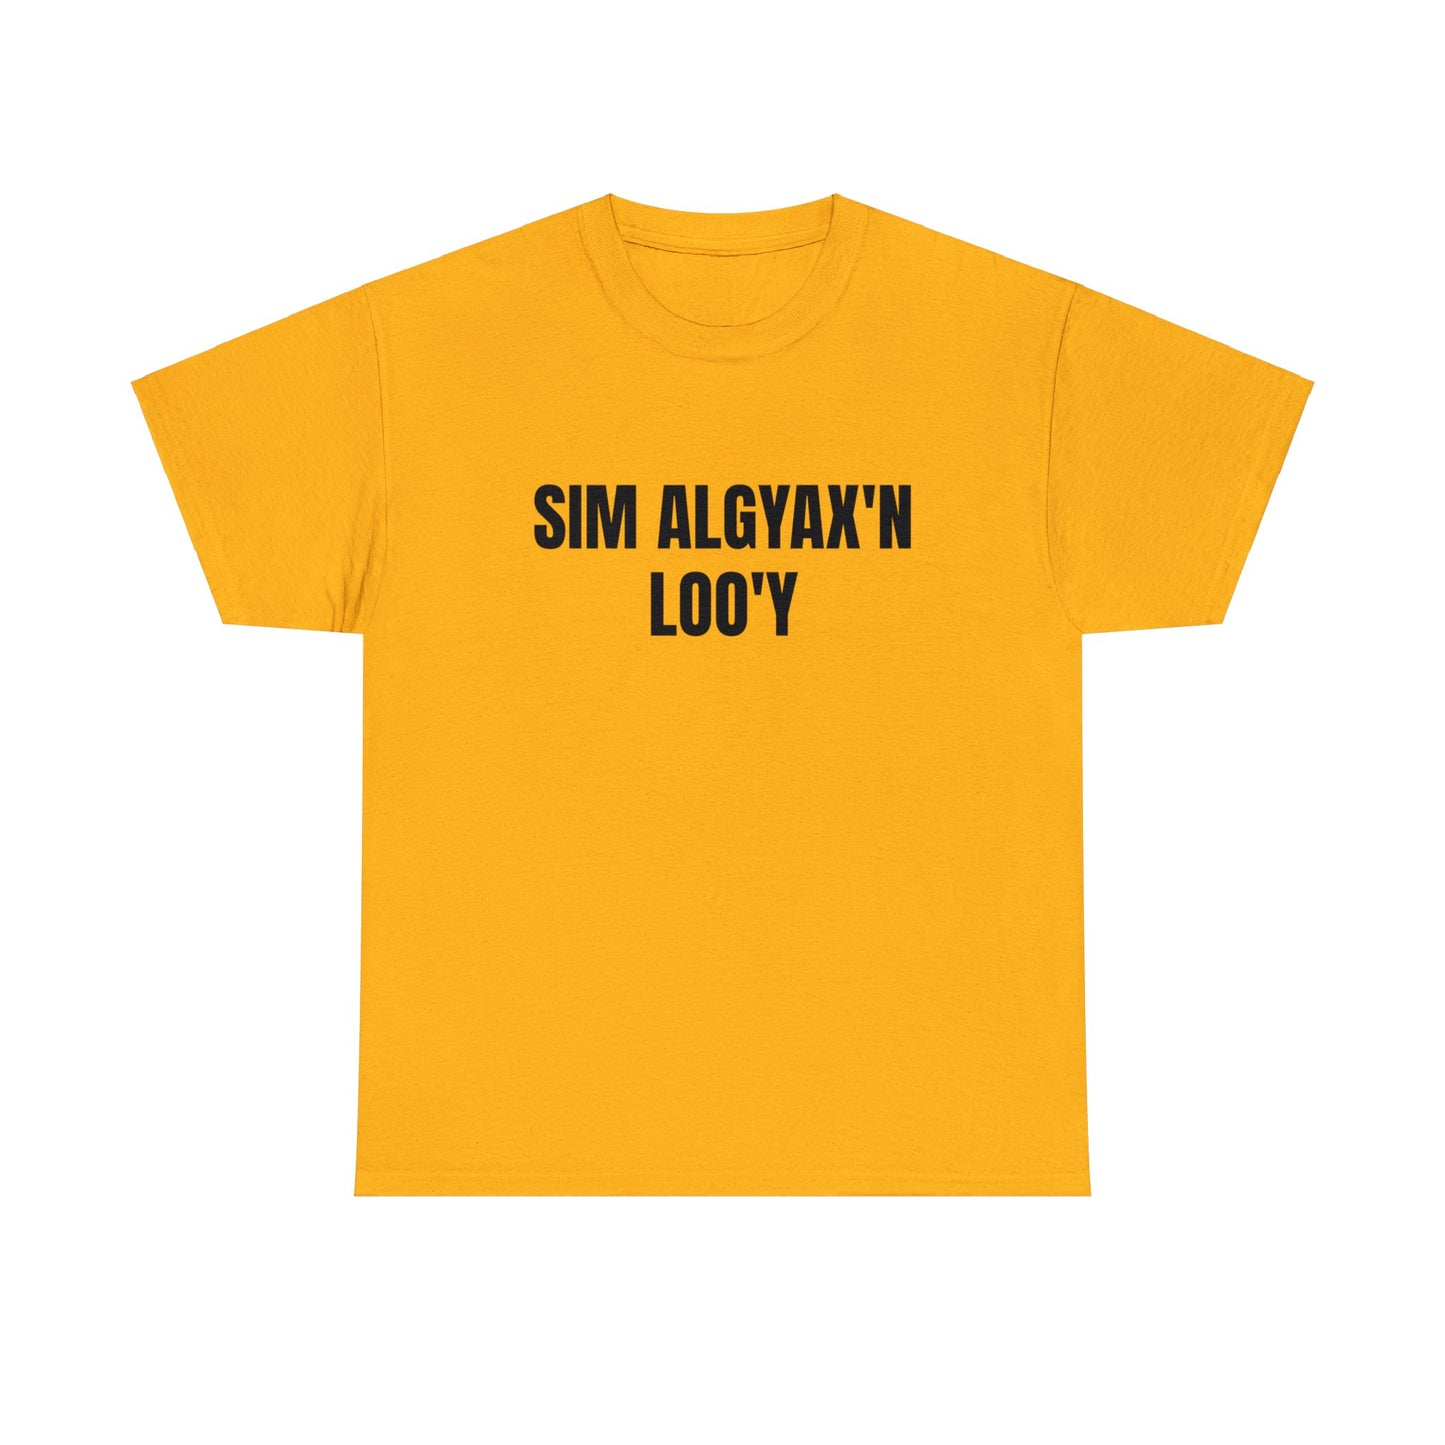 SIM ALGYAX'N LOO'Y - SPEAK SIM ALGYAX TO ME, Unisex Cotton T-shirt